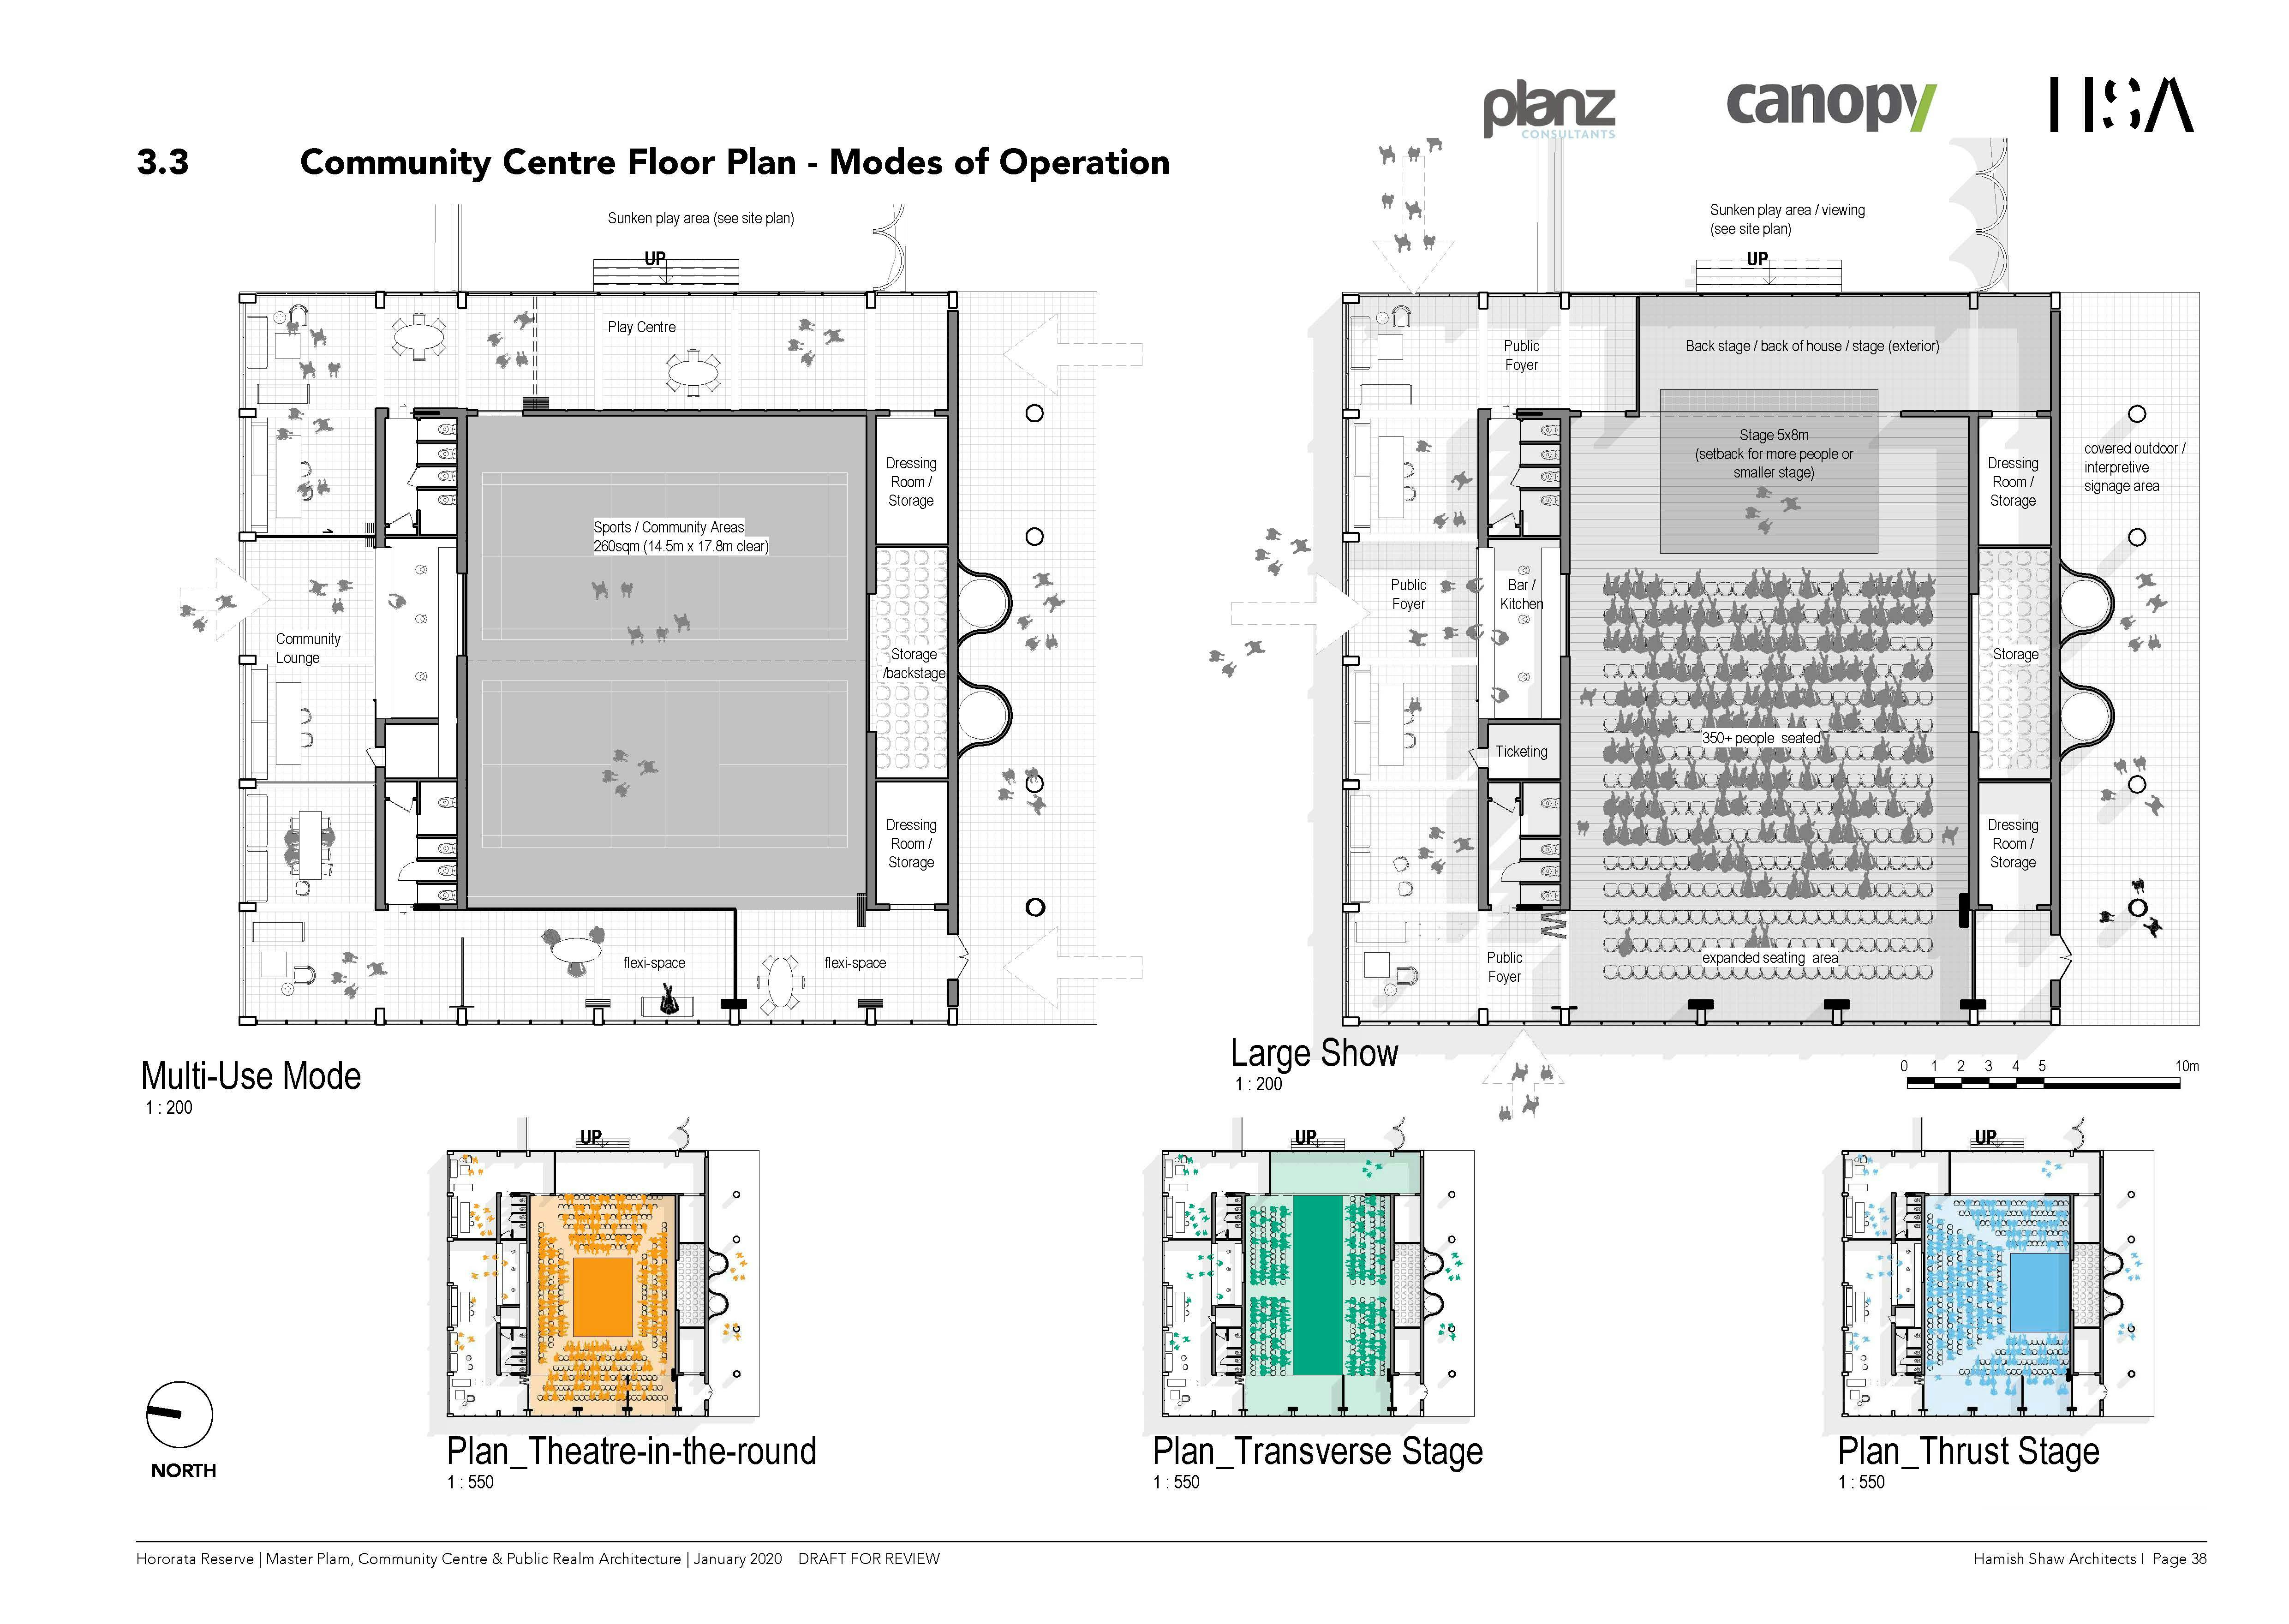 Community Centre floor plans - Mode of operation